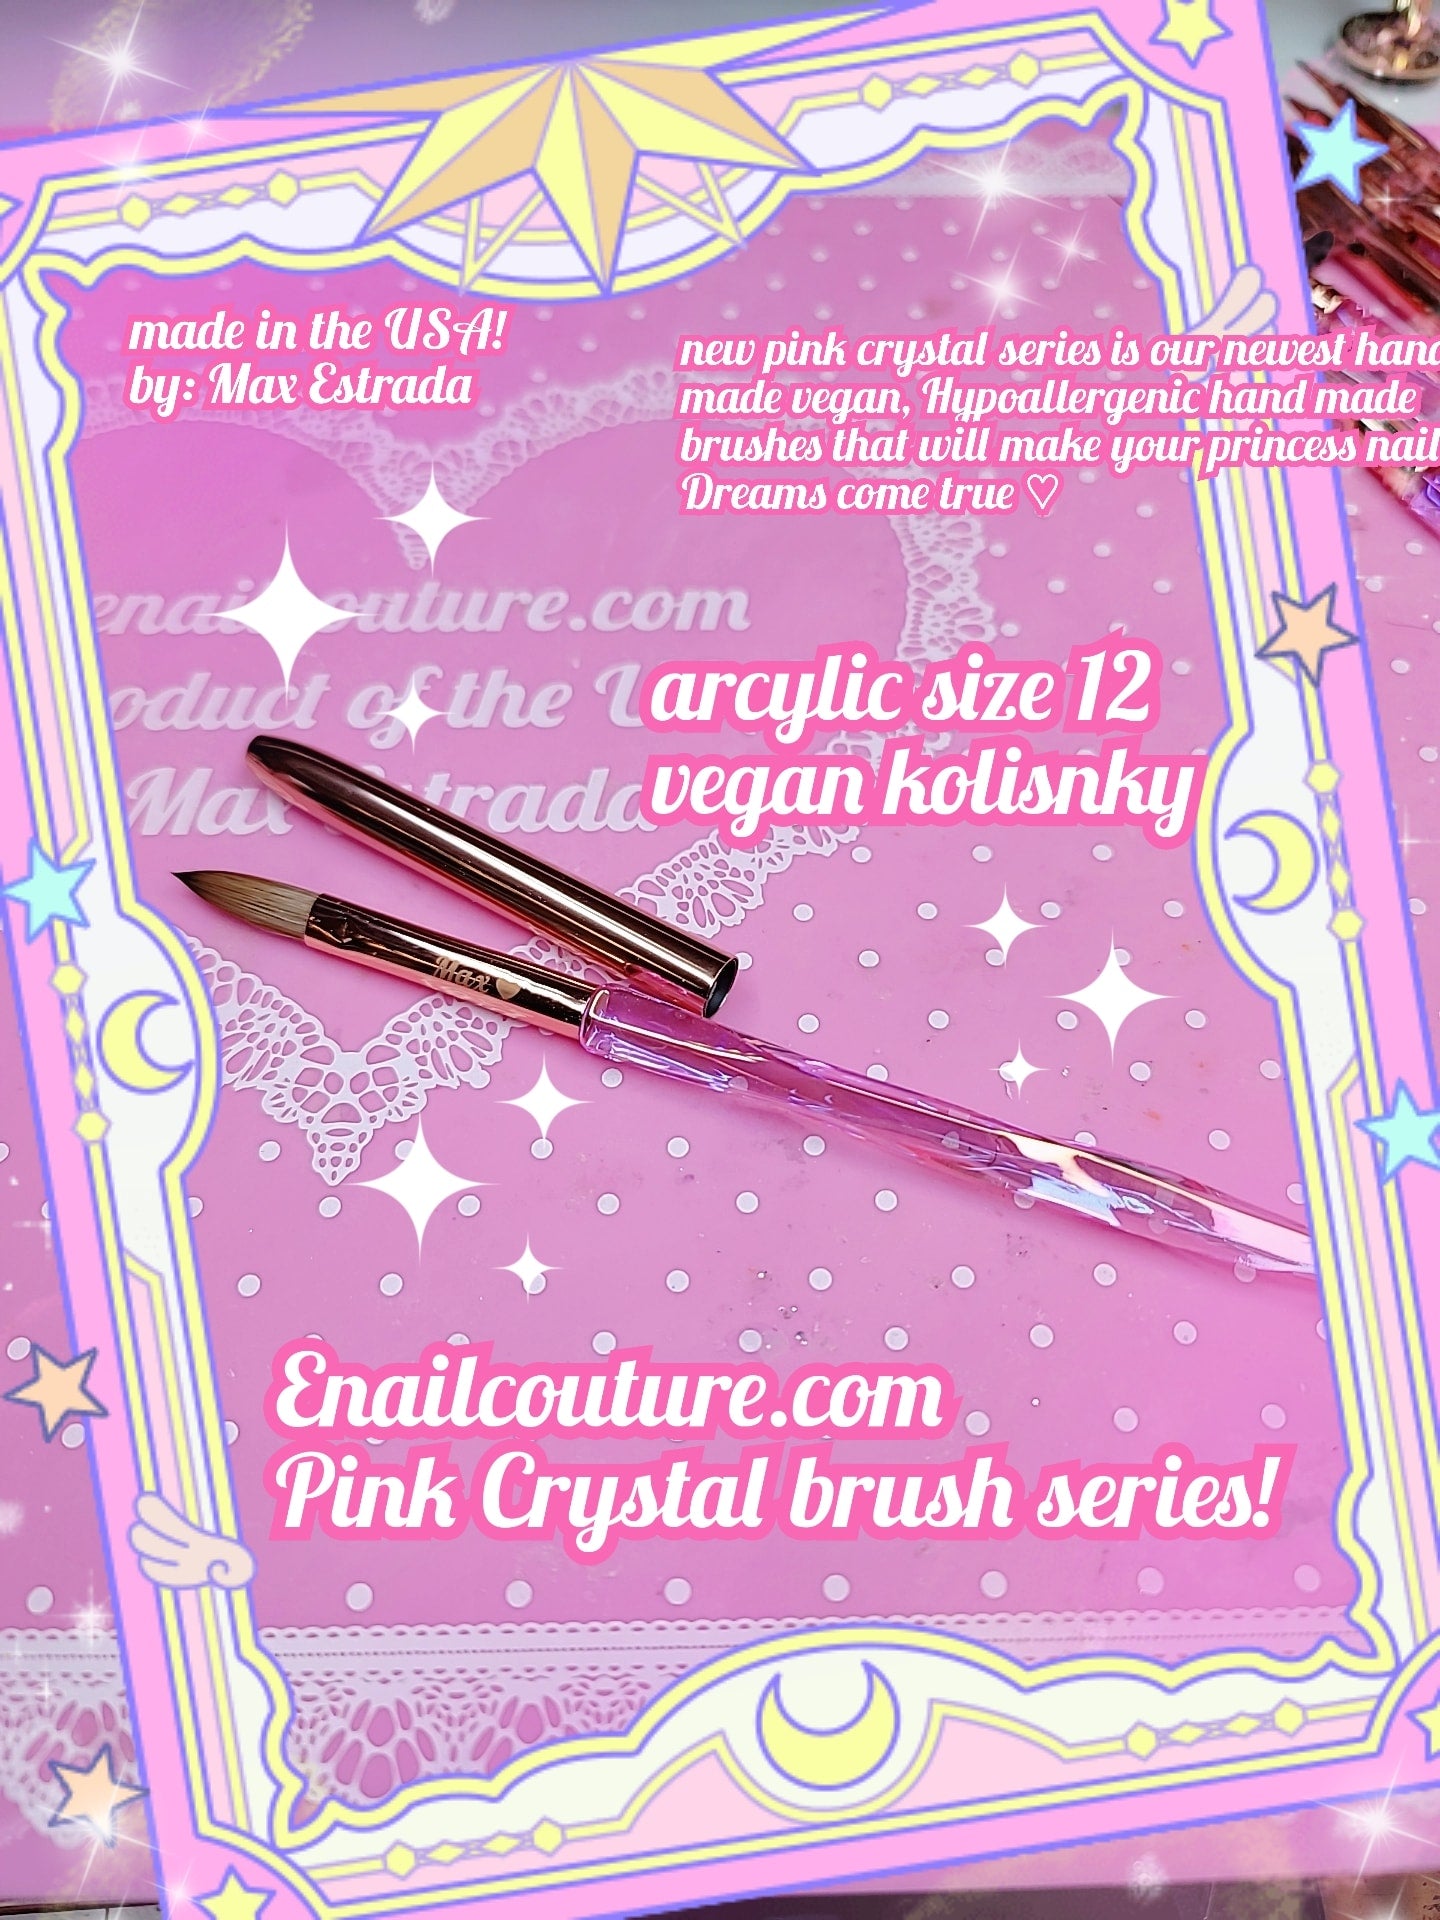 Pink Crystal Acrylic Brush (Acrylic Nail Brush for Acrylic Powder 1PC Vegan Kolinsky Sable Hair Bristles Round Oval Nail Art Carved Extend Brush Manicure Pedicure Application #12)